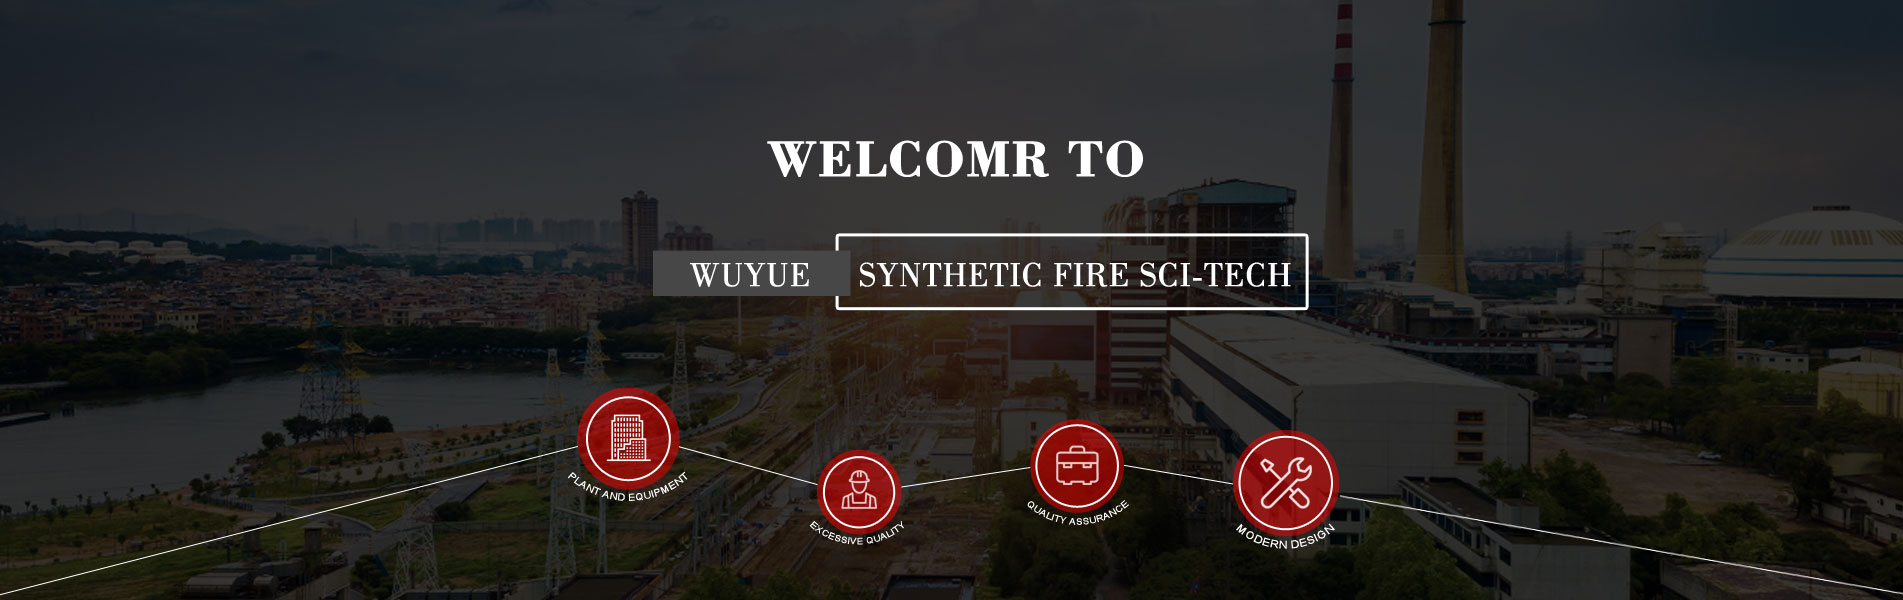 Suzhou Wuyue Synthetic Fire Sci-tech Co., Ltd. Company profile